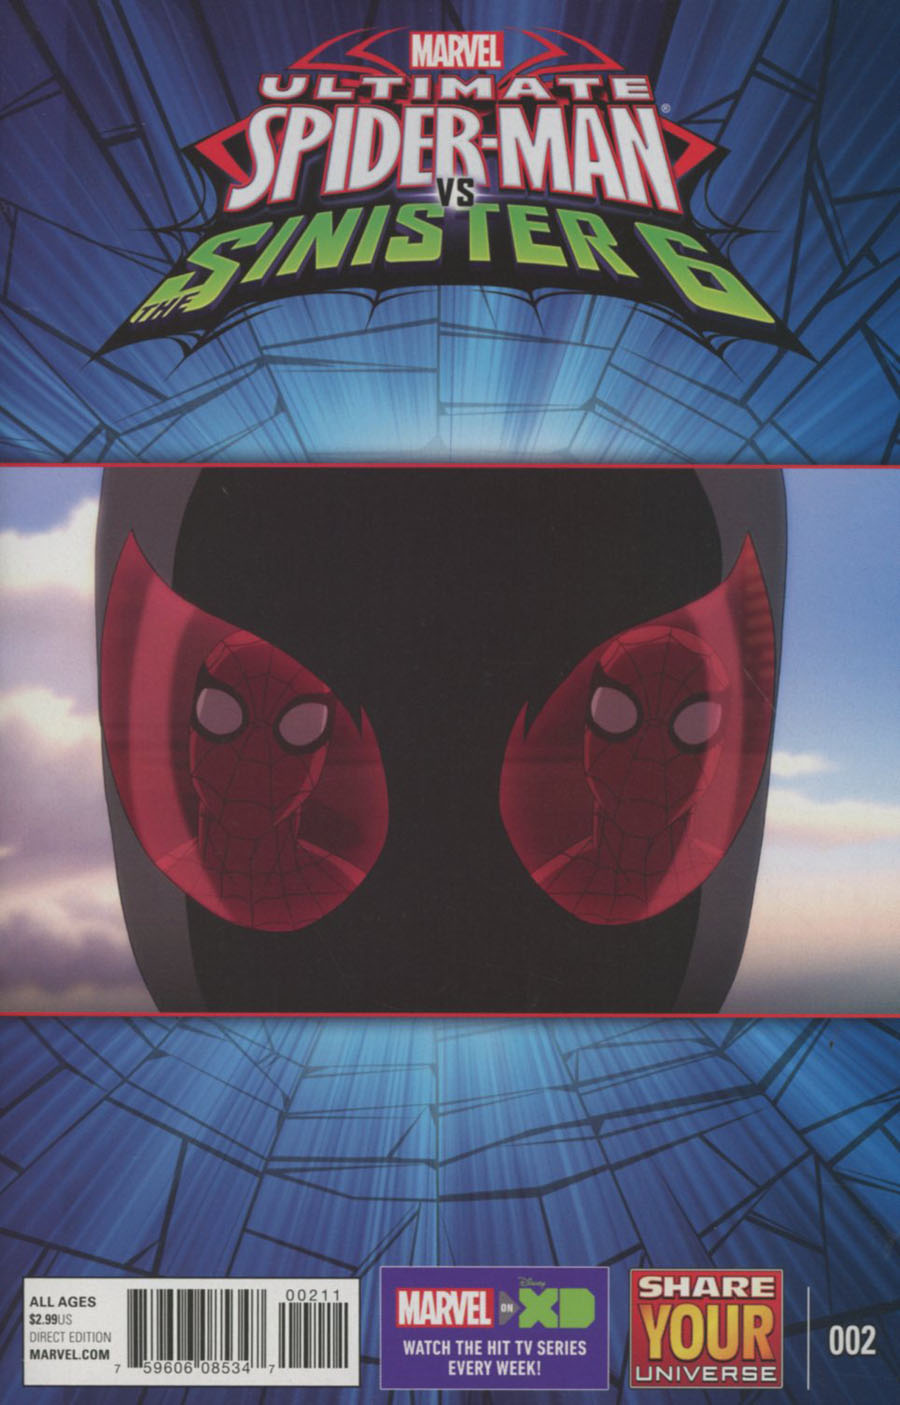 Marvel Universe Ultimate Spider-Man vs Sinister Six #2